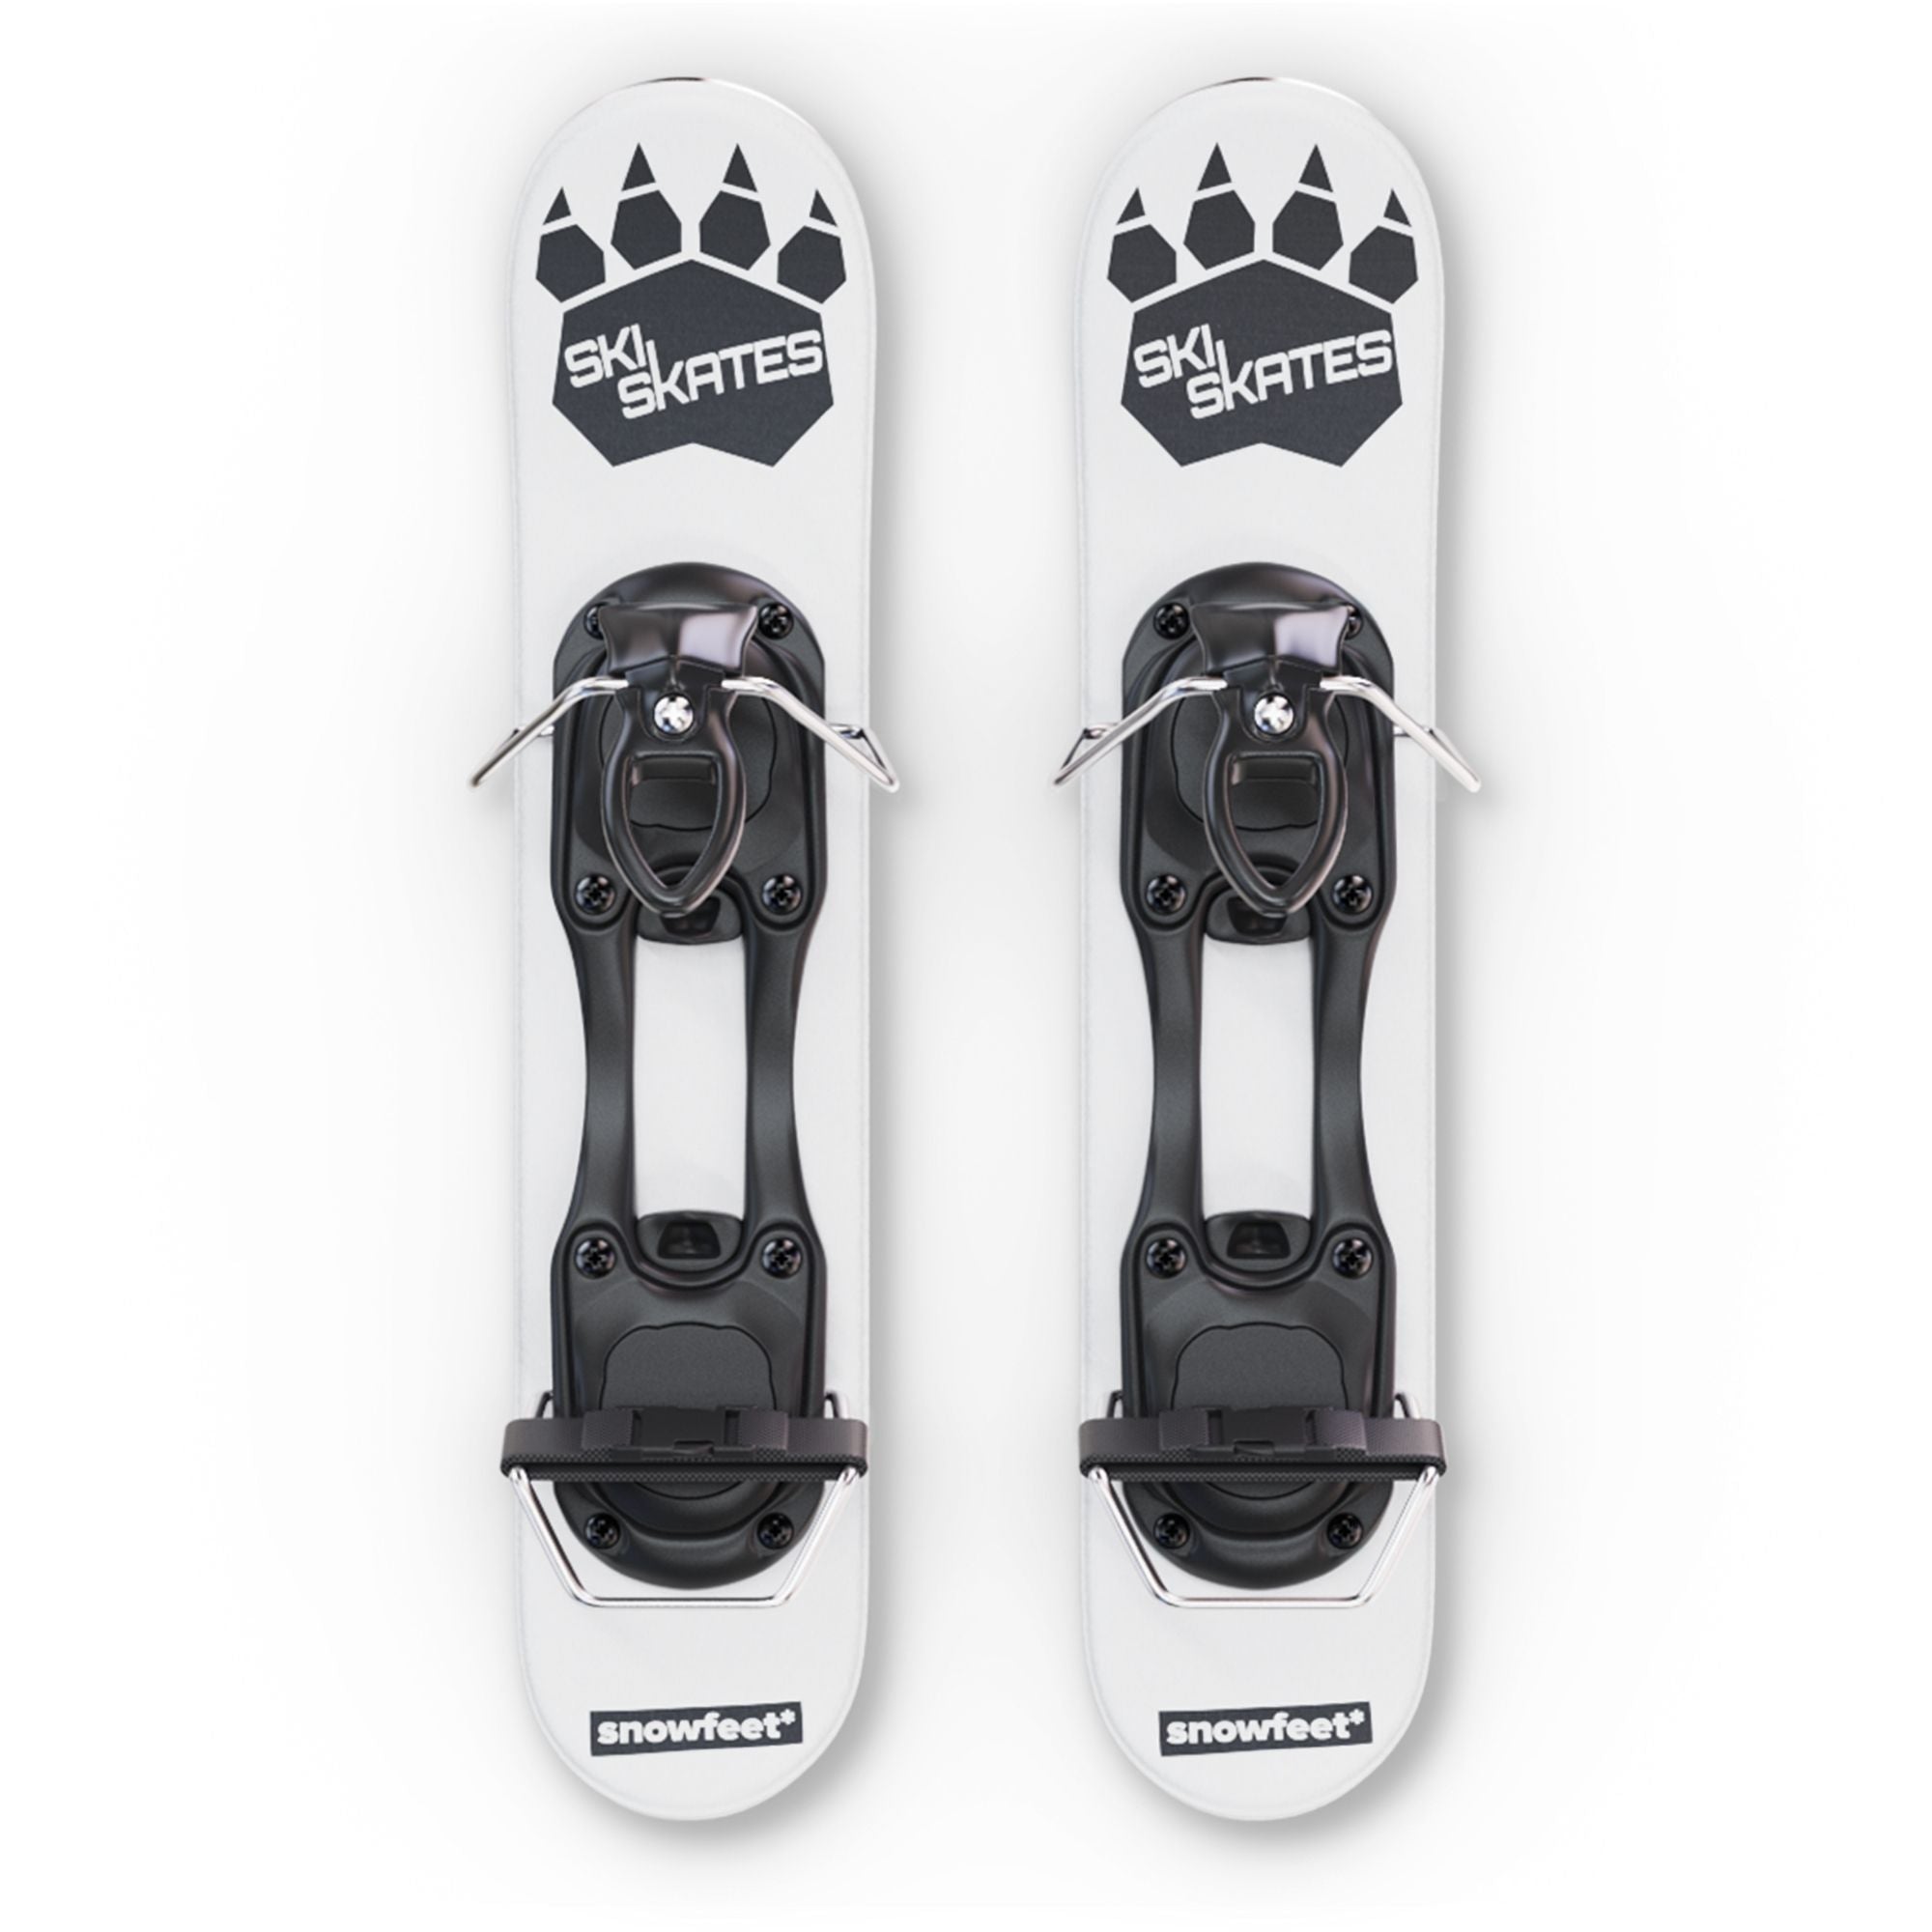 Skiskates by Snowfeet* | 44 CM | Snowblades Skiblades